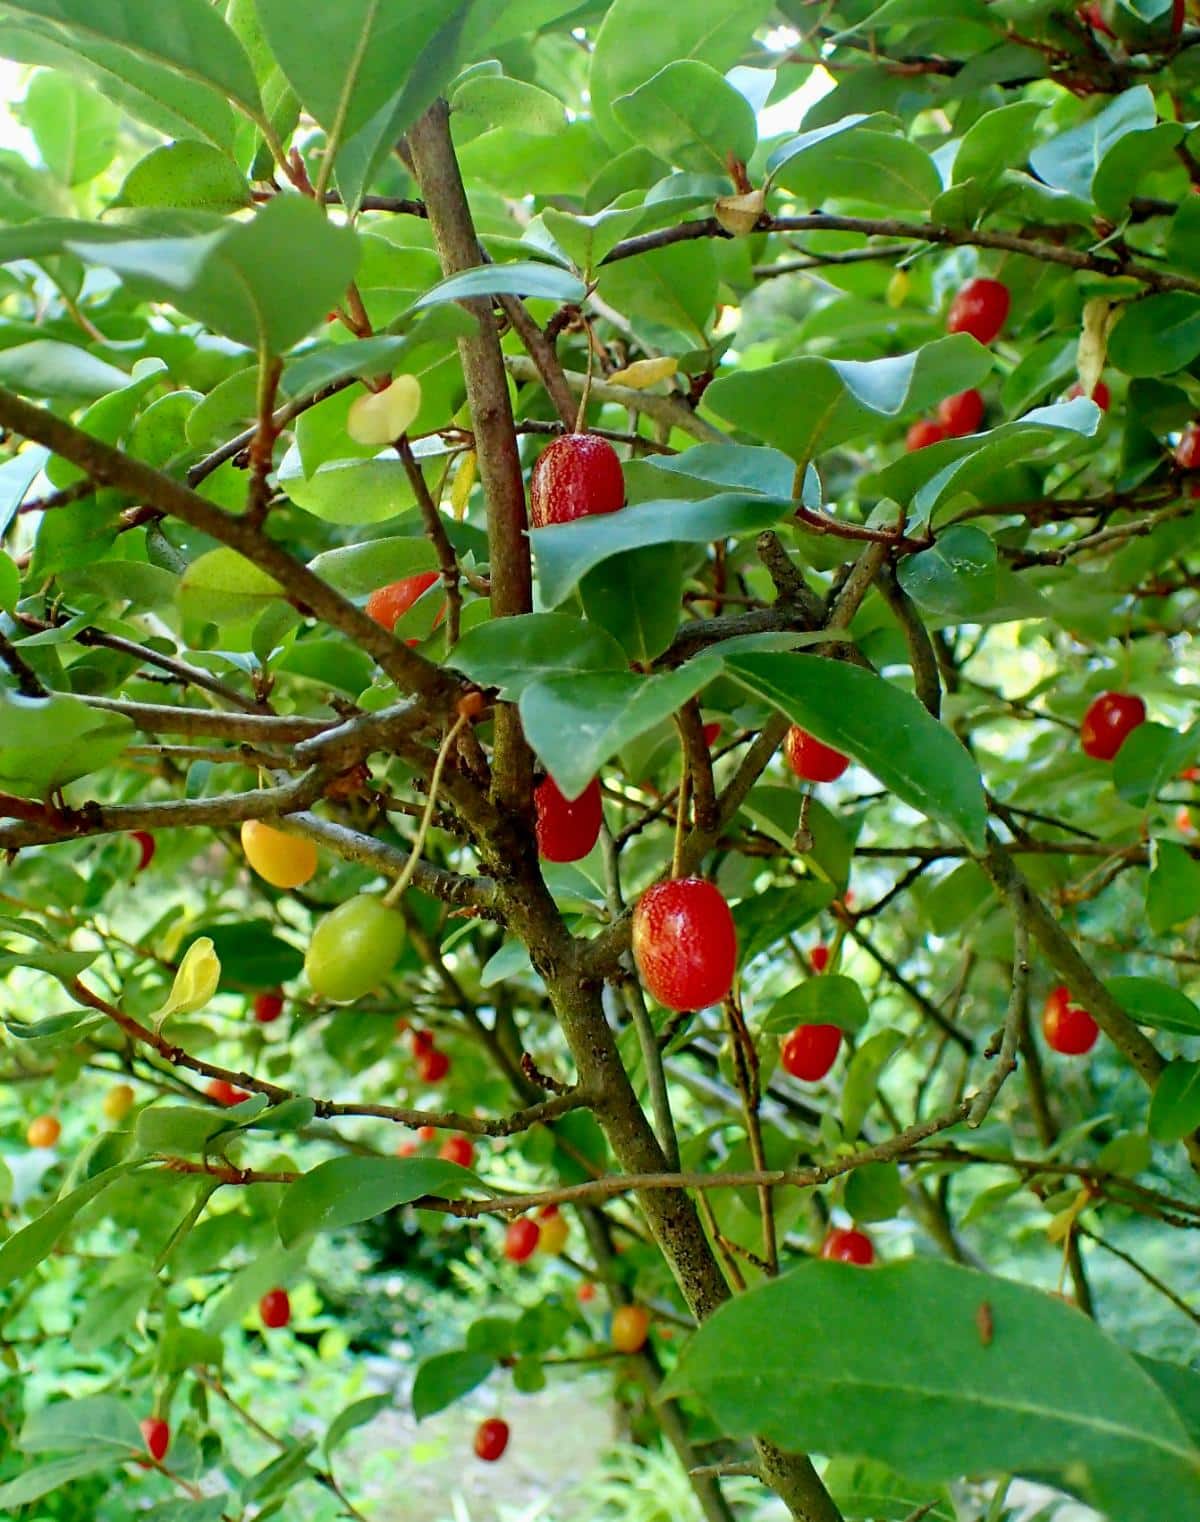 Goumi berries ripening